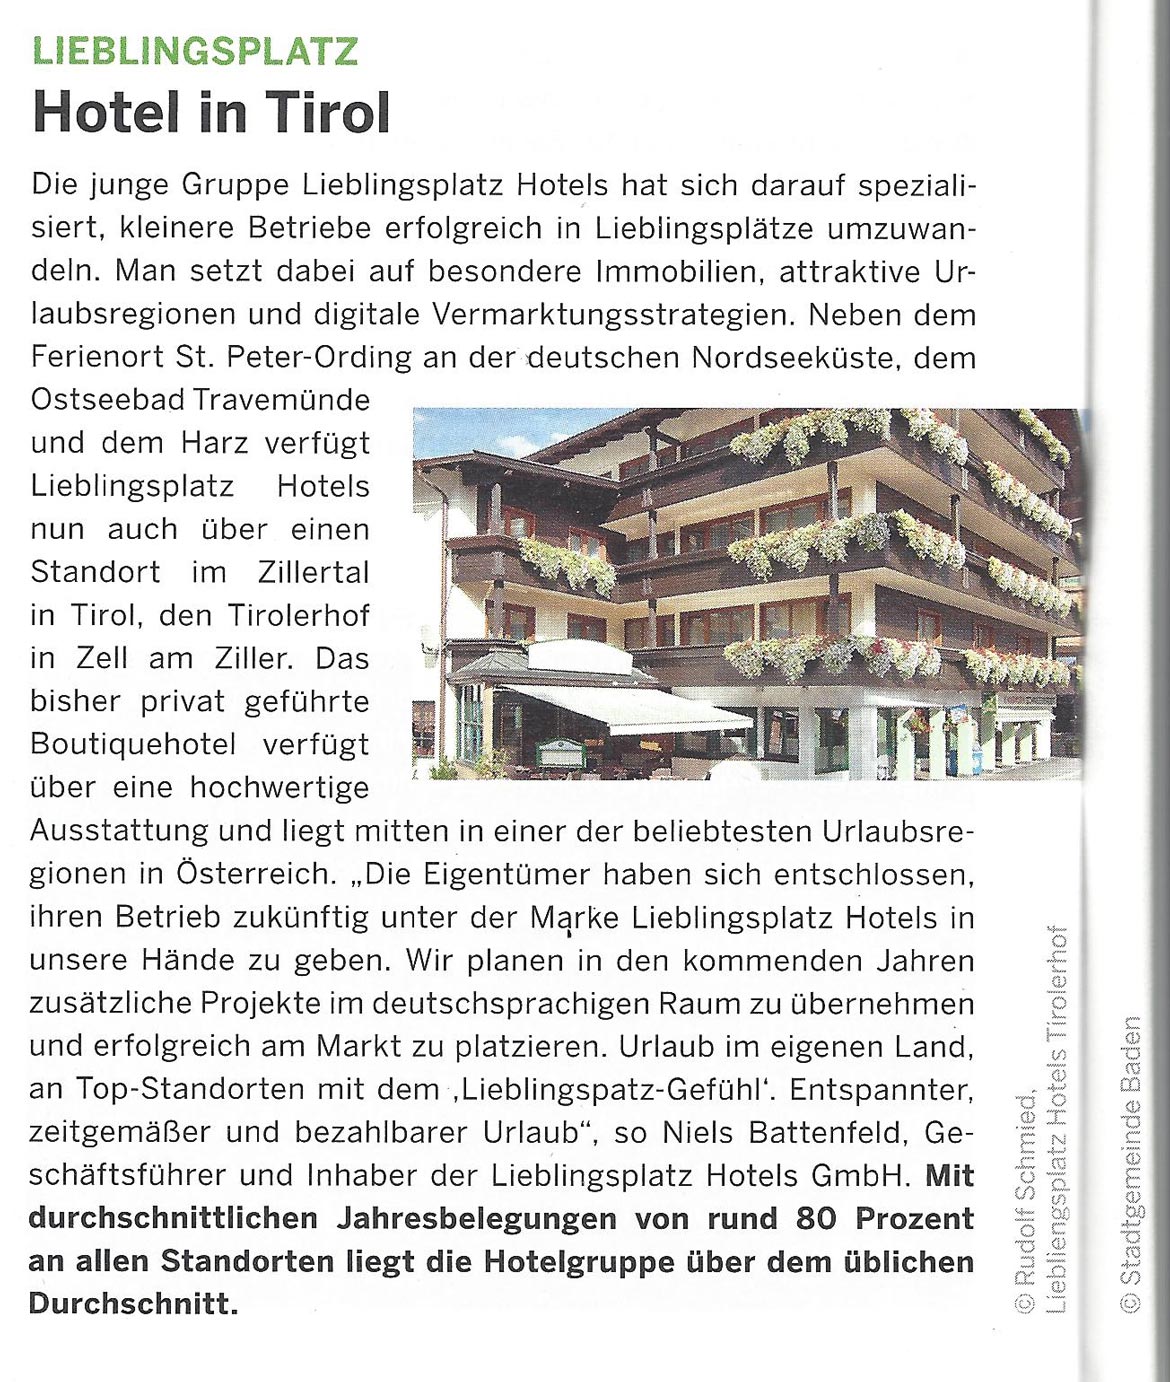 a3 - Lieblingsplatz Hotel in Tirol